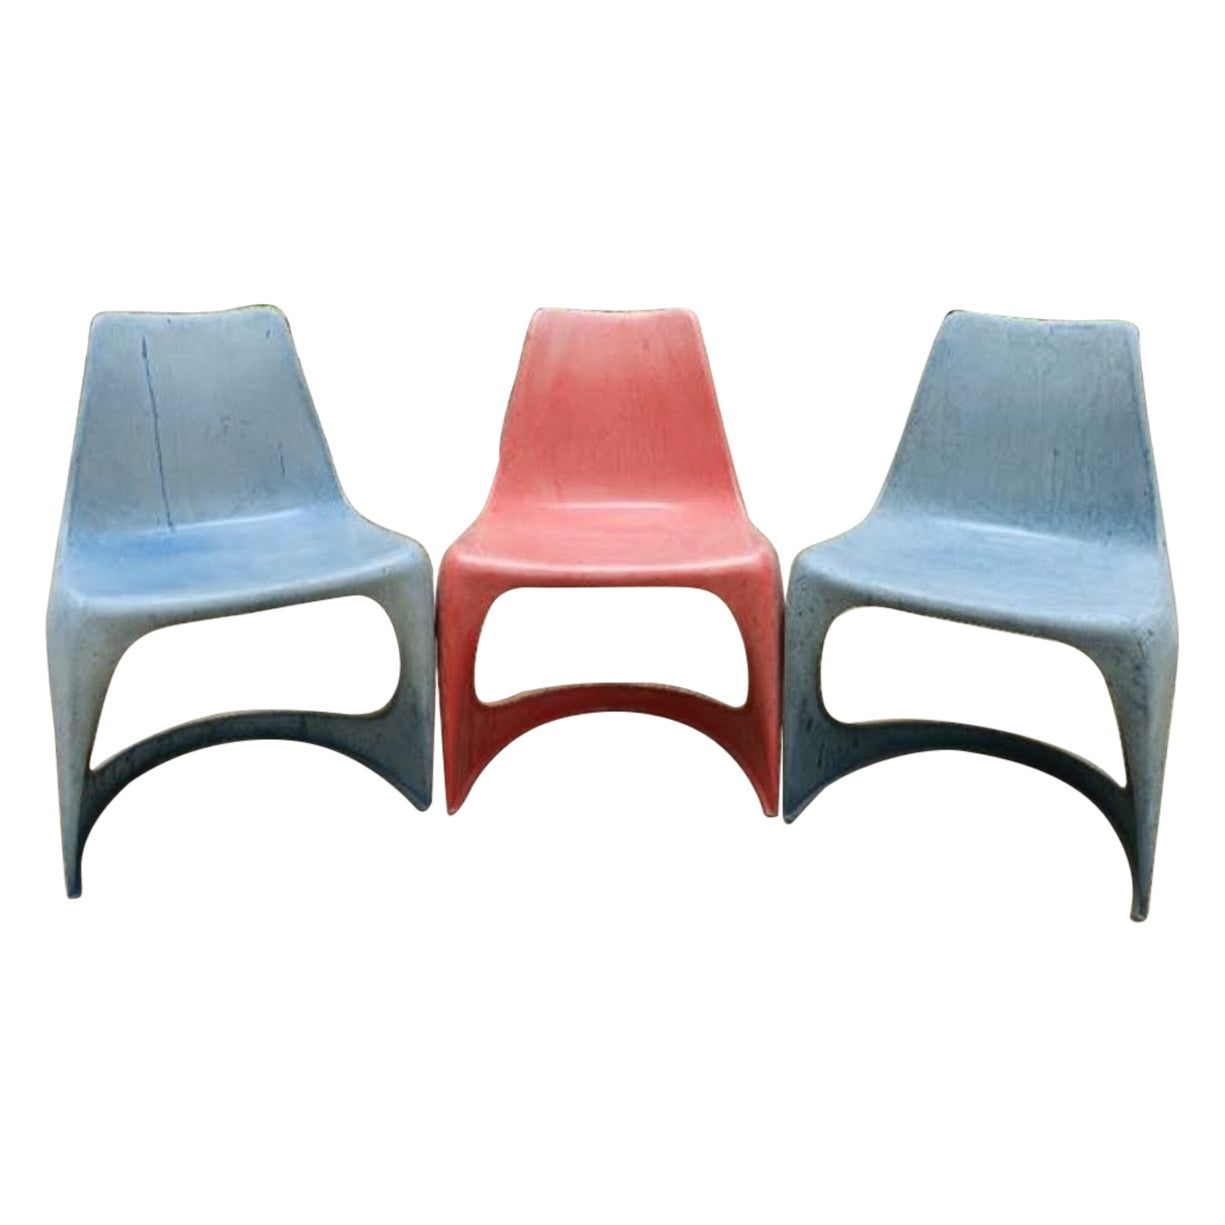 3 Vintage Designer Chairs Steen Ostergaard Manufacturer Cado 60s For Sale